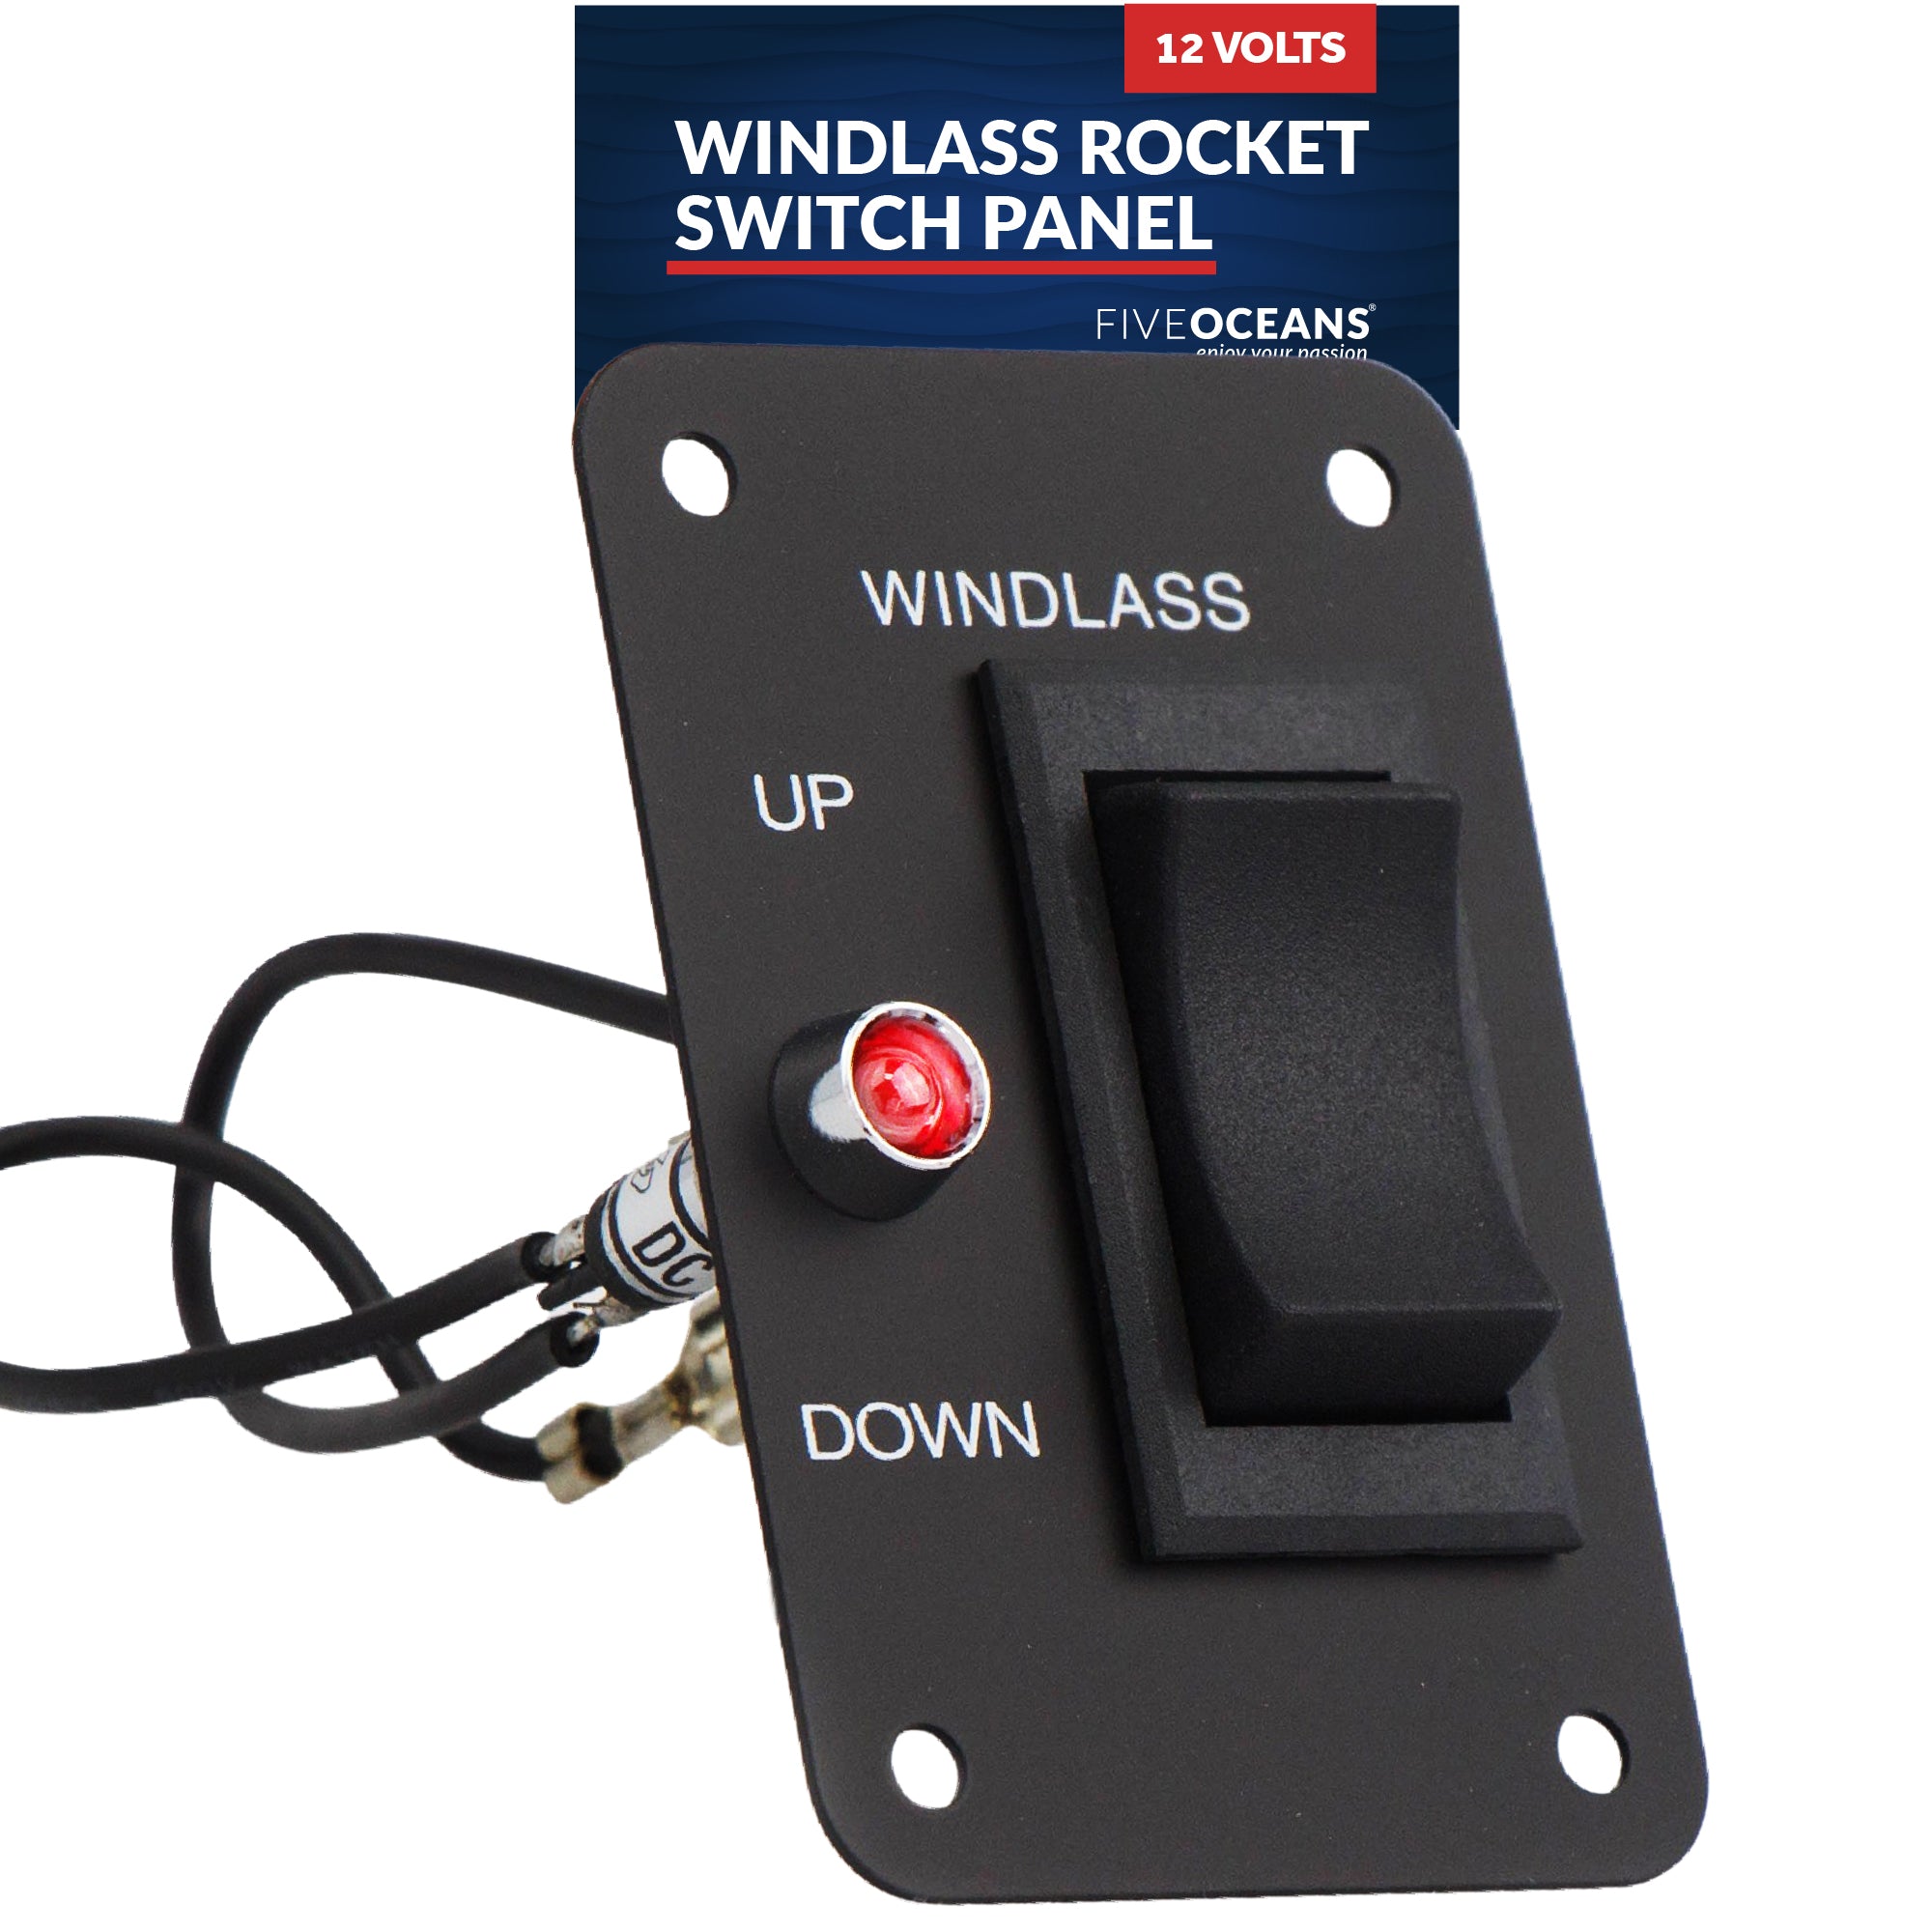 Anchor Windlass Rocker Switch Panel, 12V - FO3739